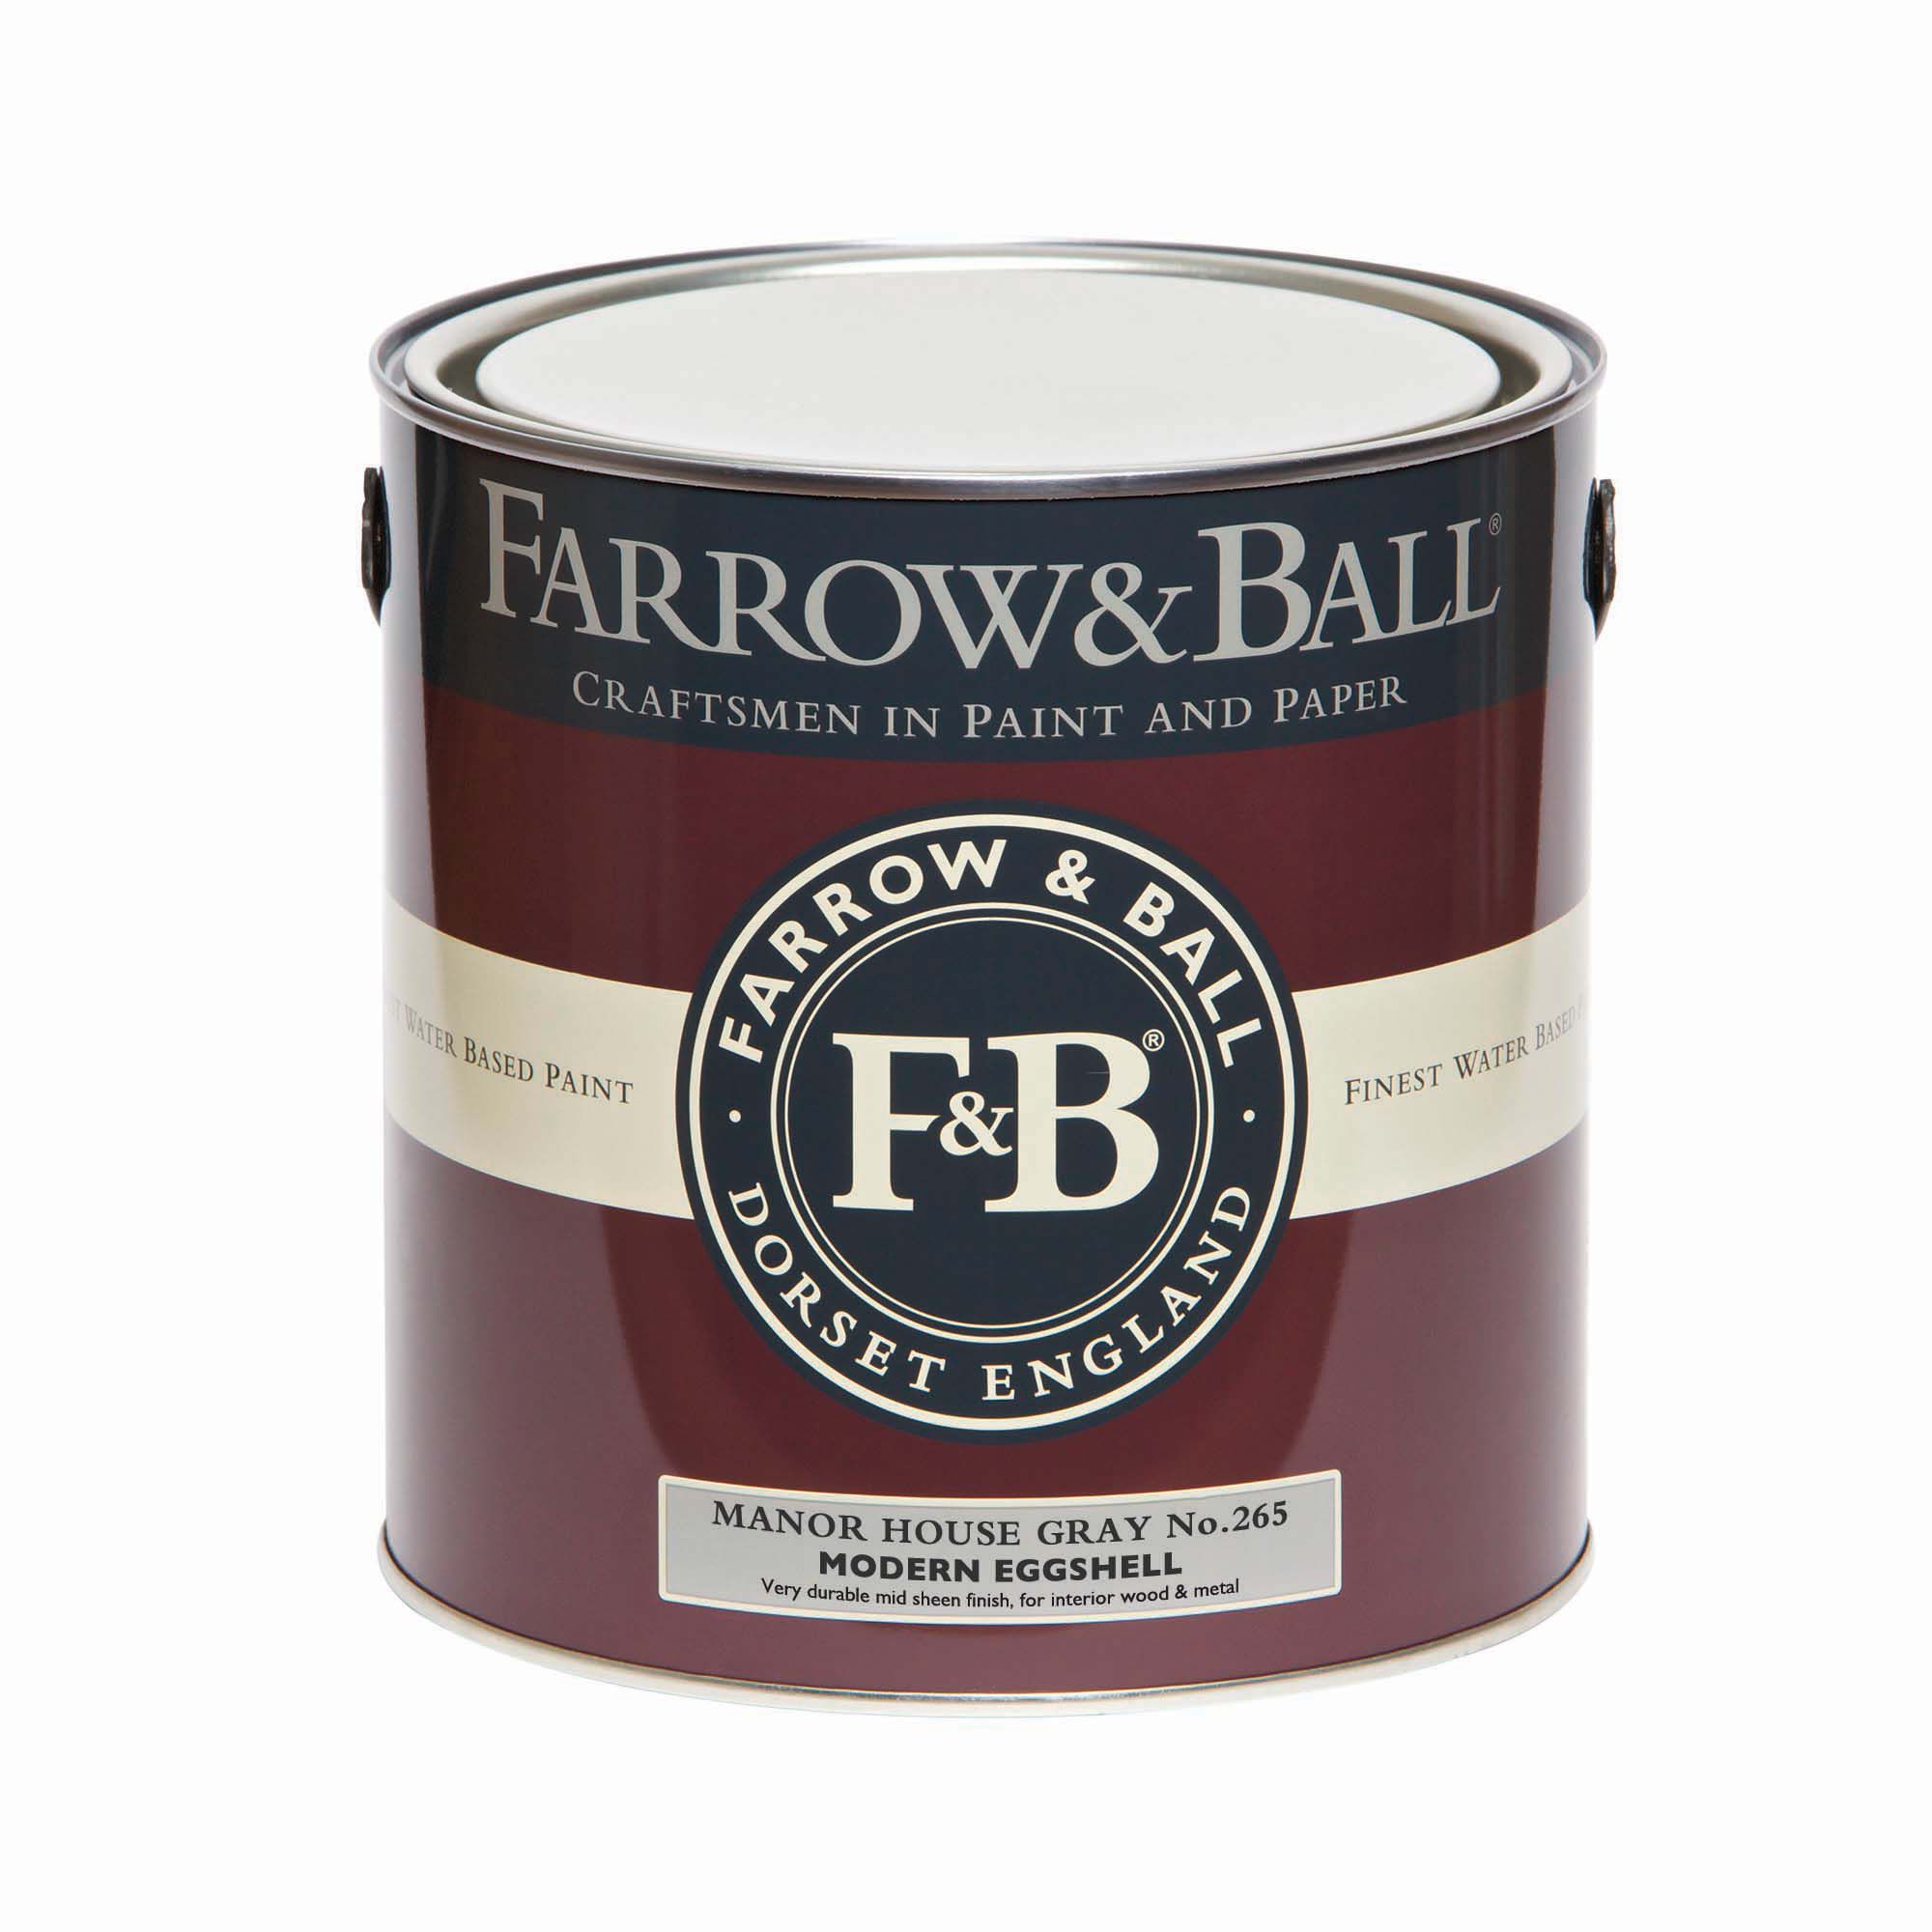 Farrow & Ball Modern Manor House Gray No.265 Eggshell Paint, 2.5L